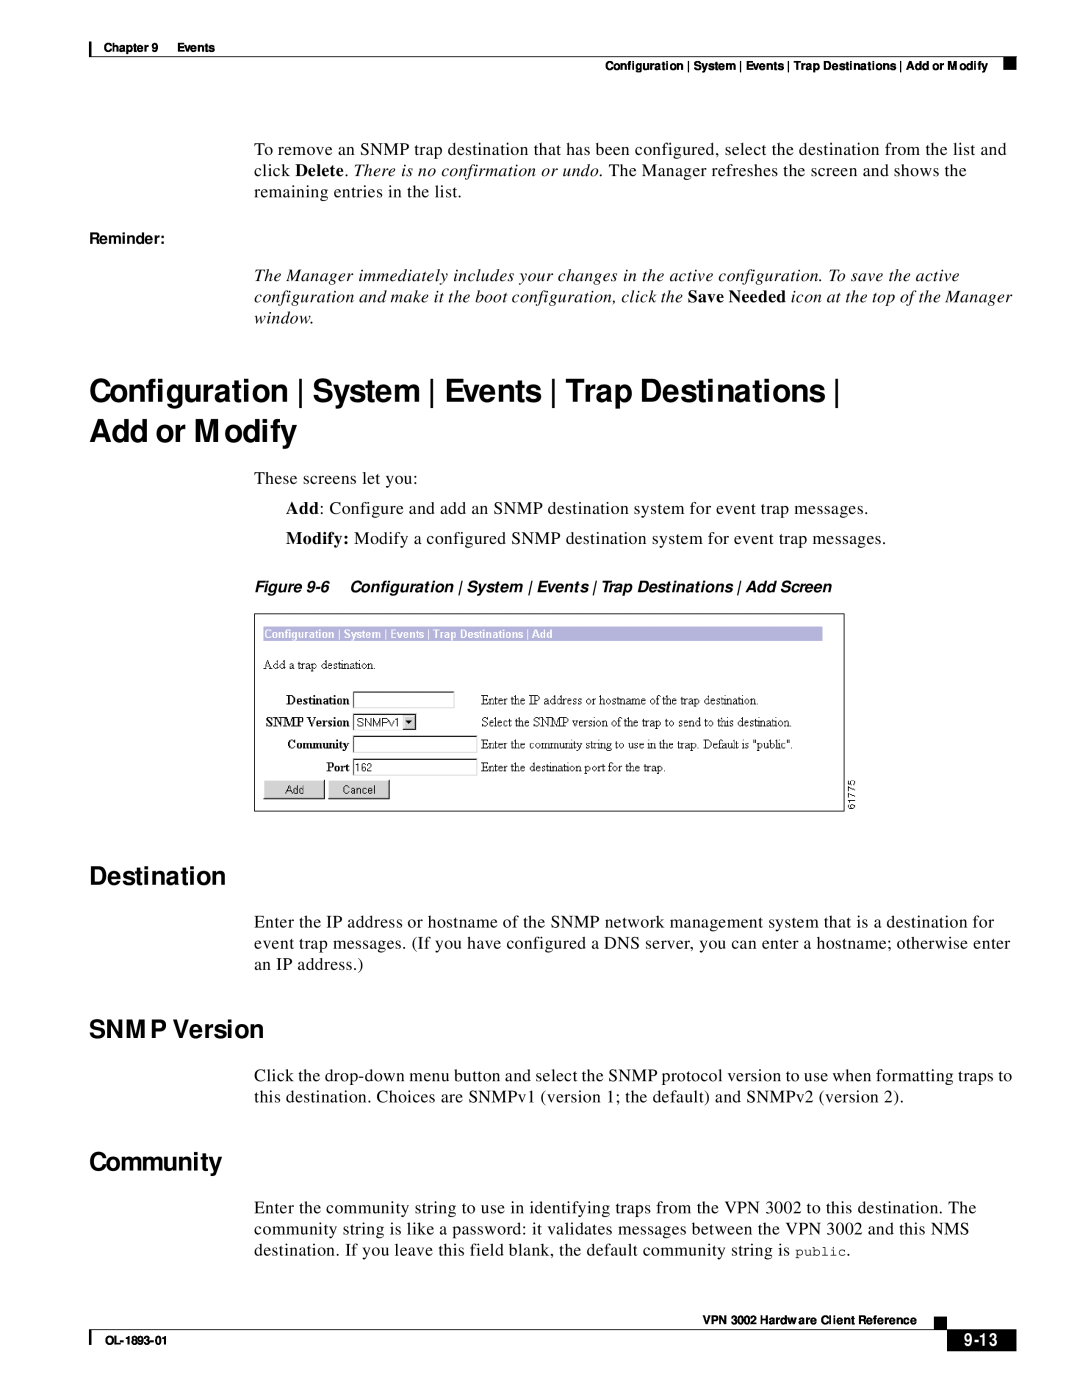 Cisco Systems VPN 3002 manual SNMP Version, Community, 9-13, Destination, Reminder 